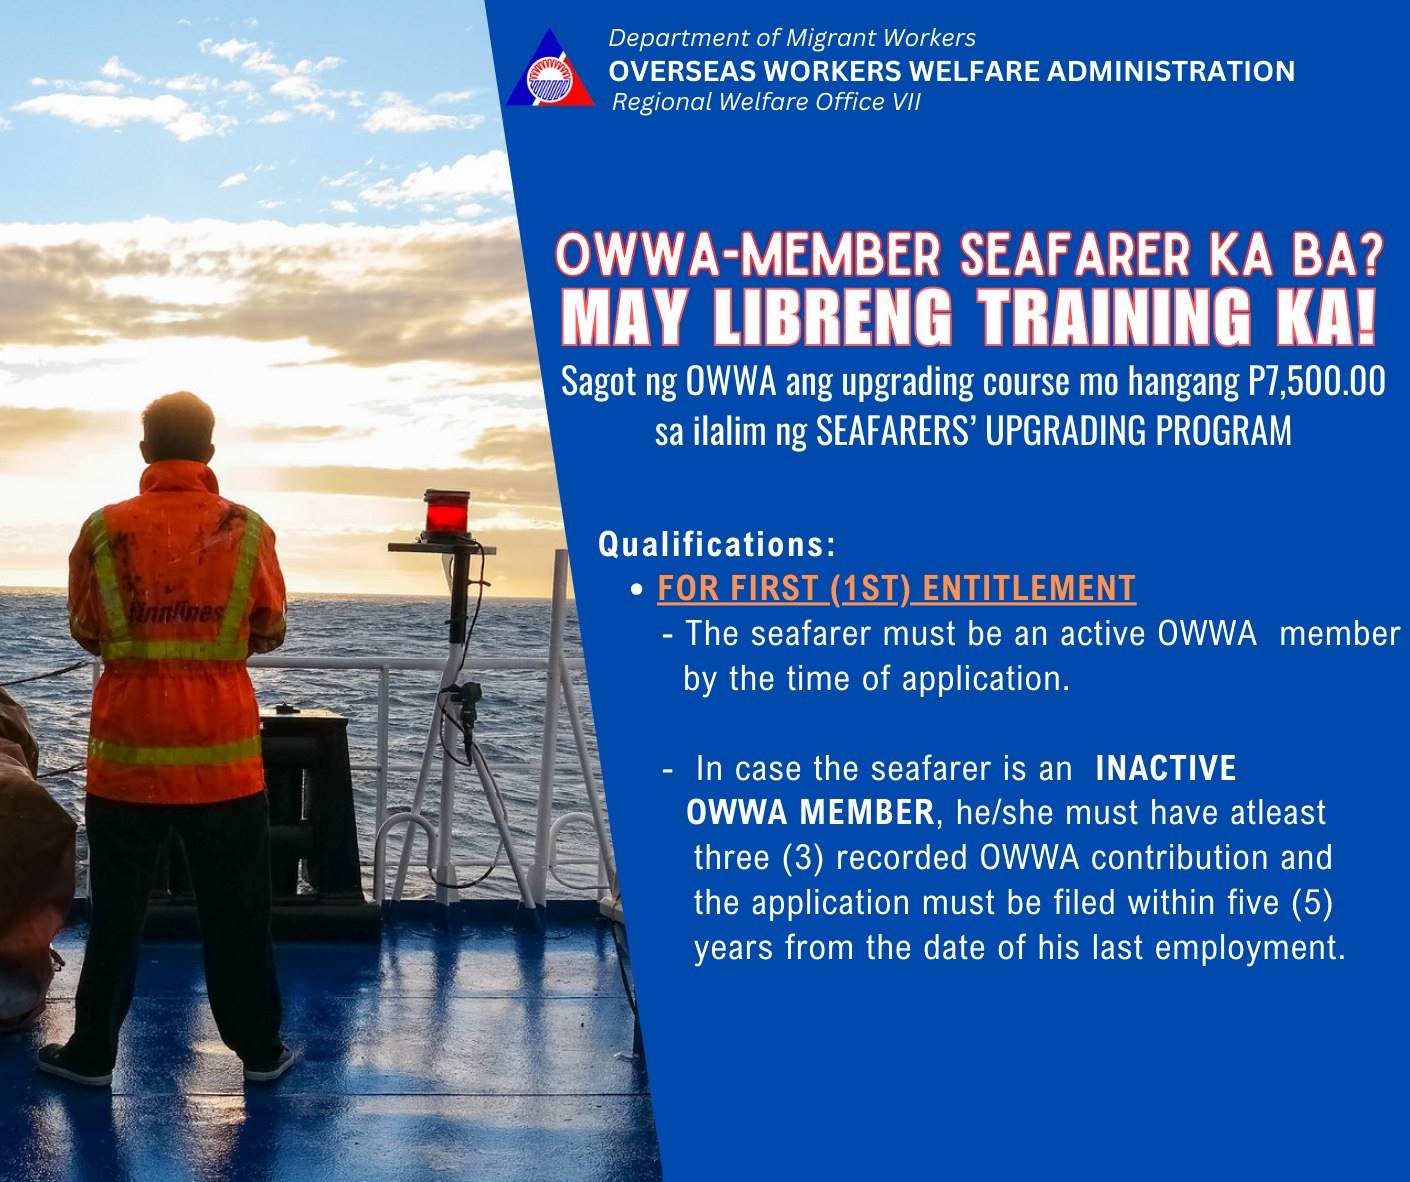 owwa seafarers upgrading program requirements application